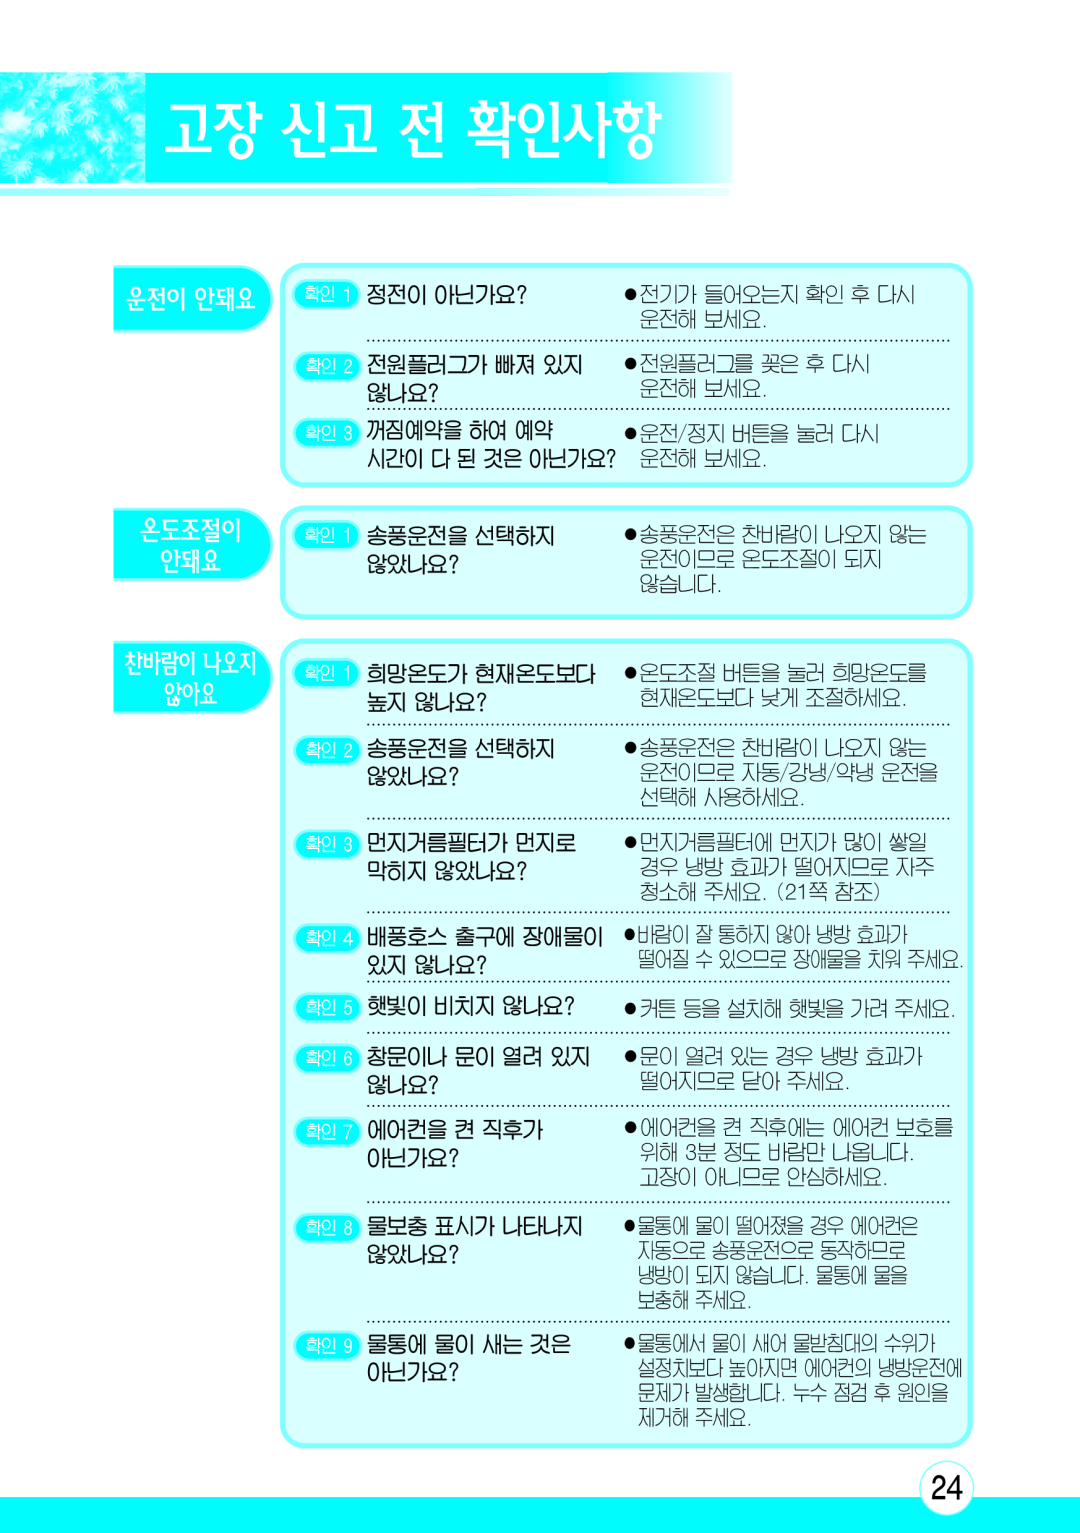 Samsung AM-C610 manual 